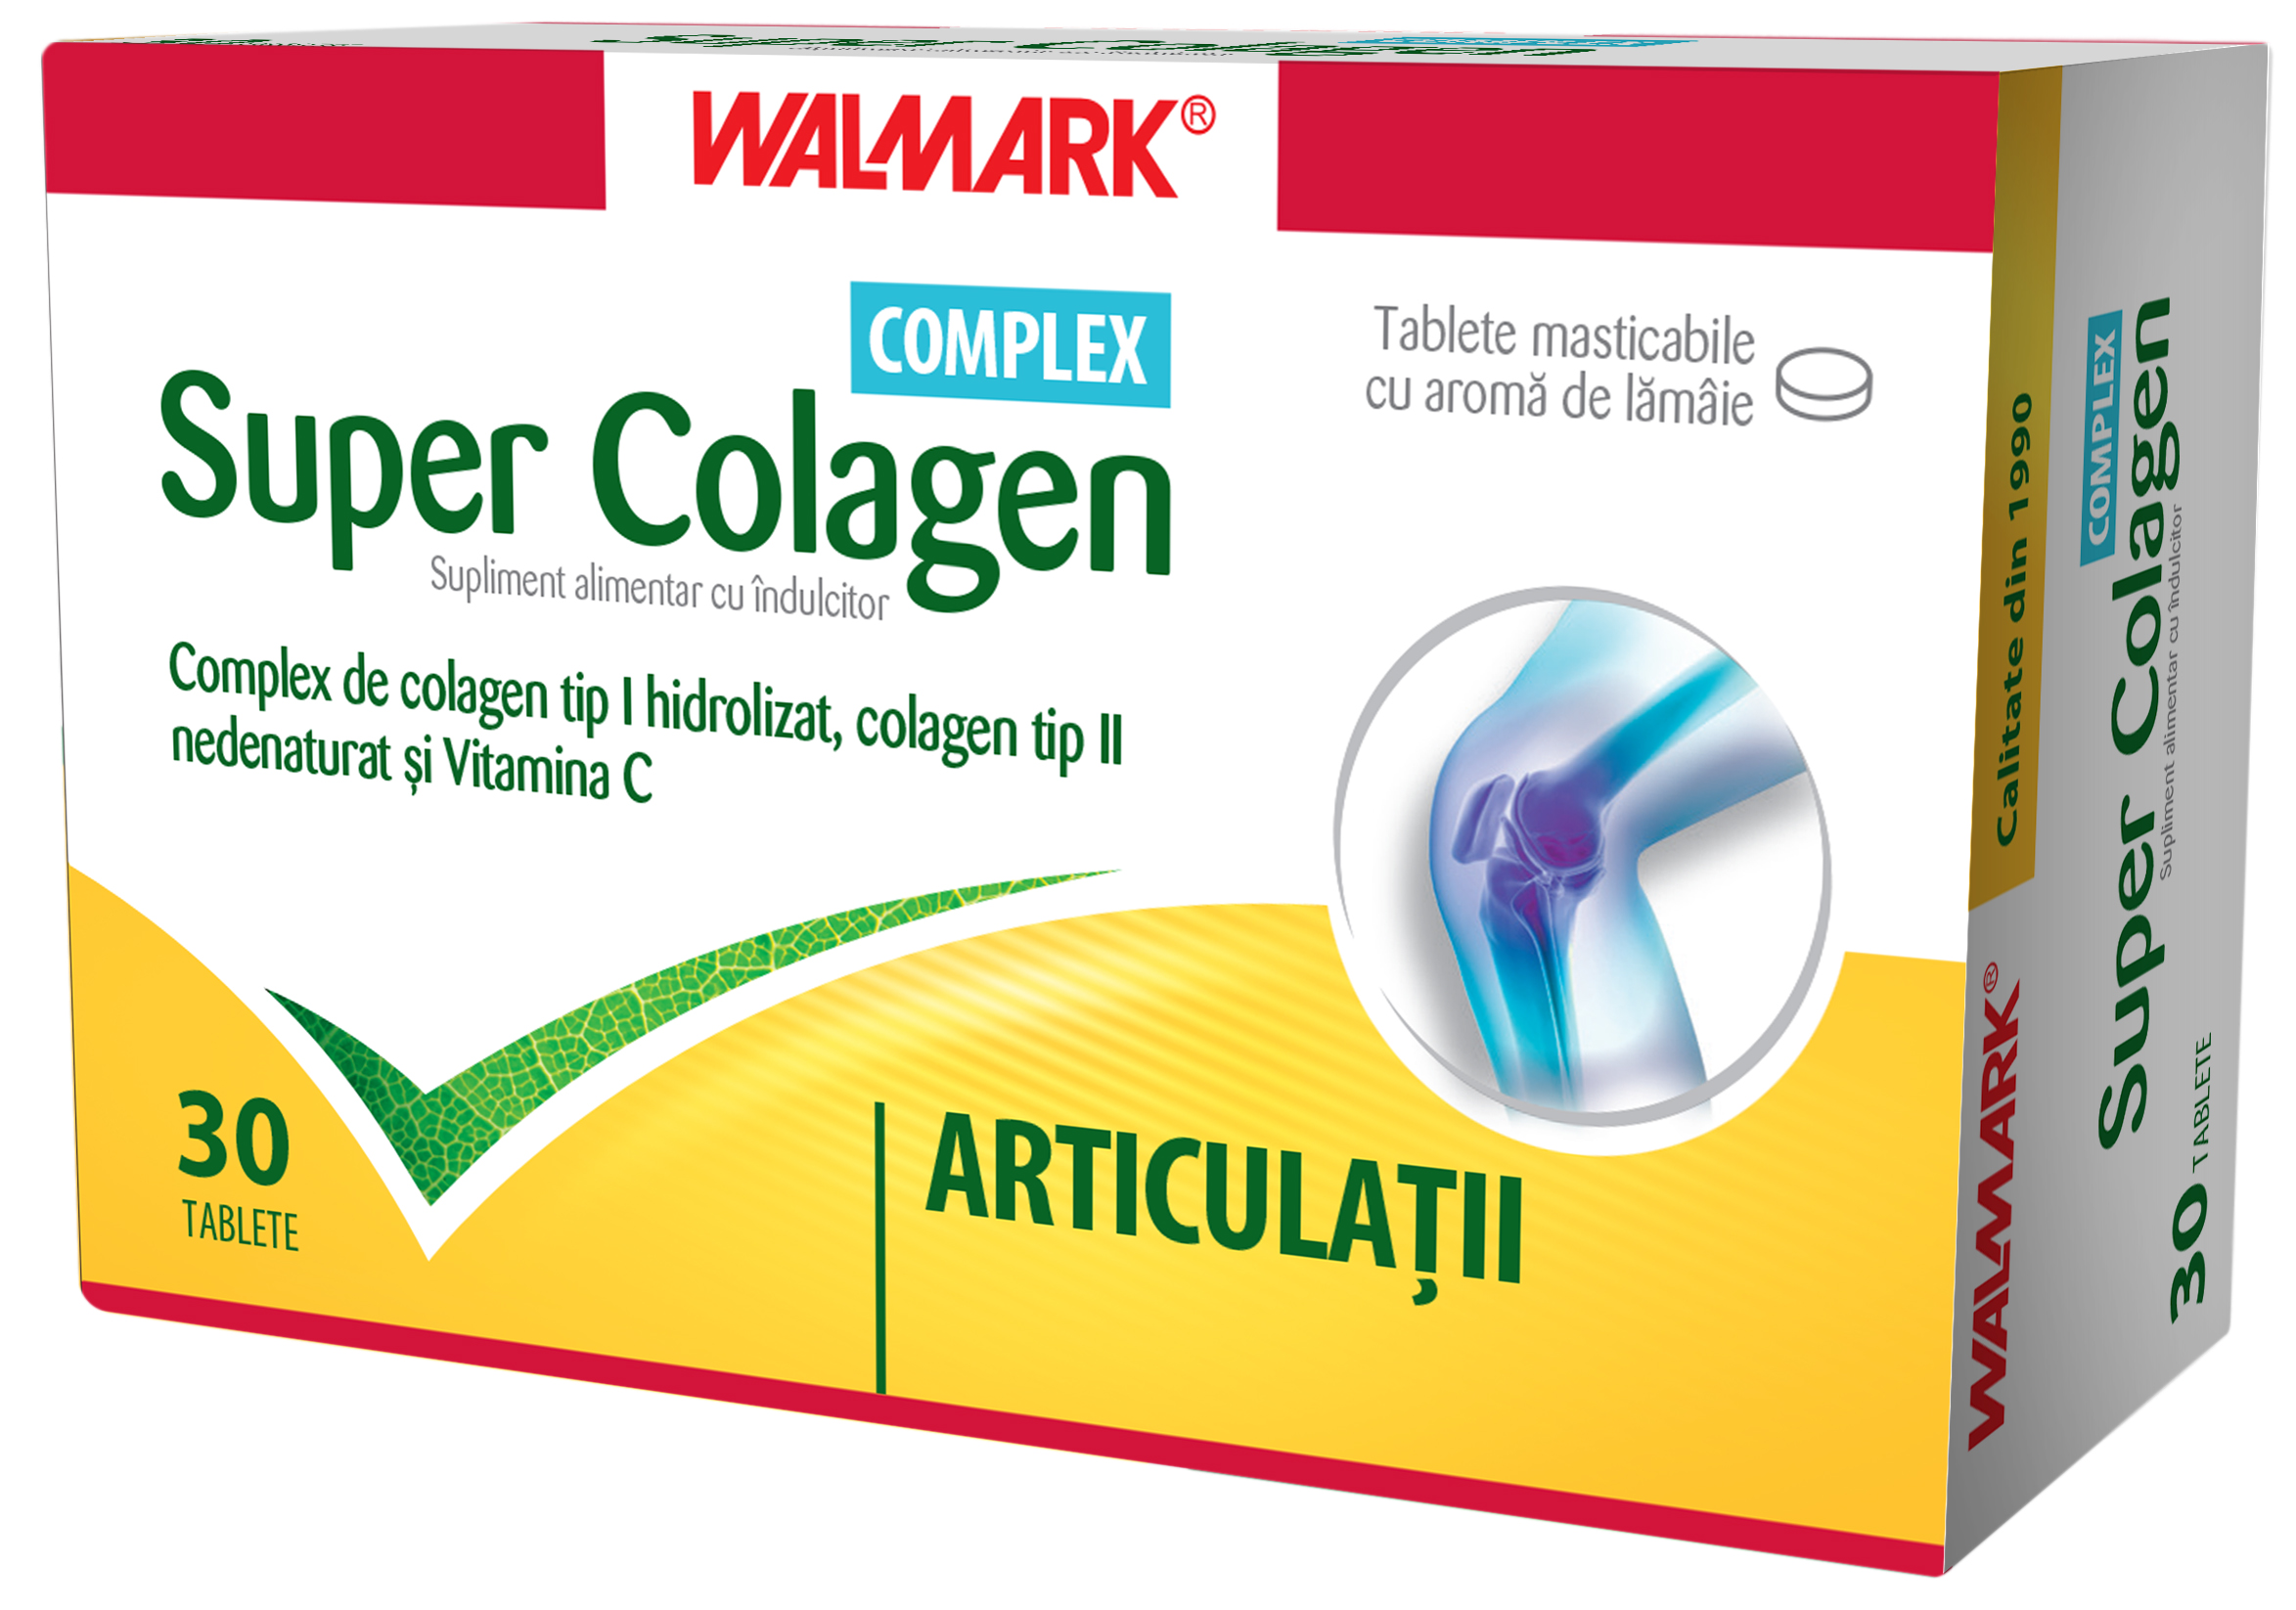 Colagen si acid hialuronic Forte 30 capsule